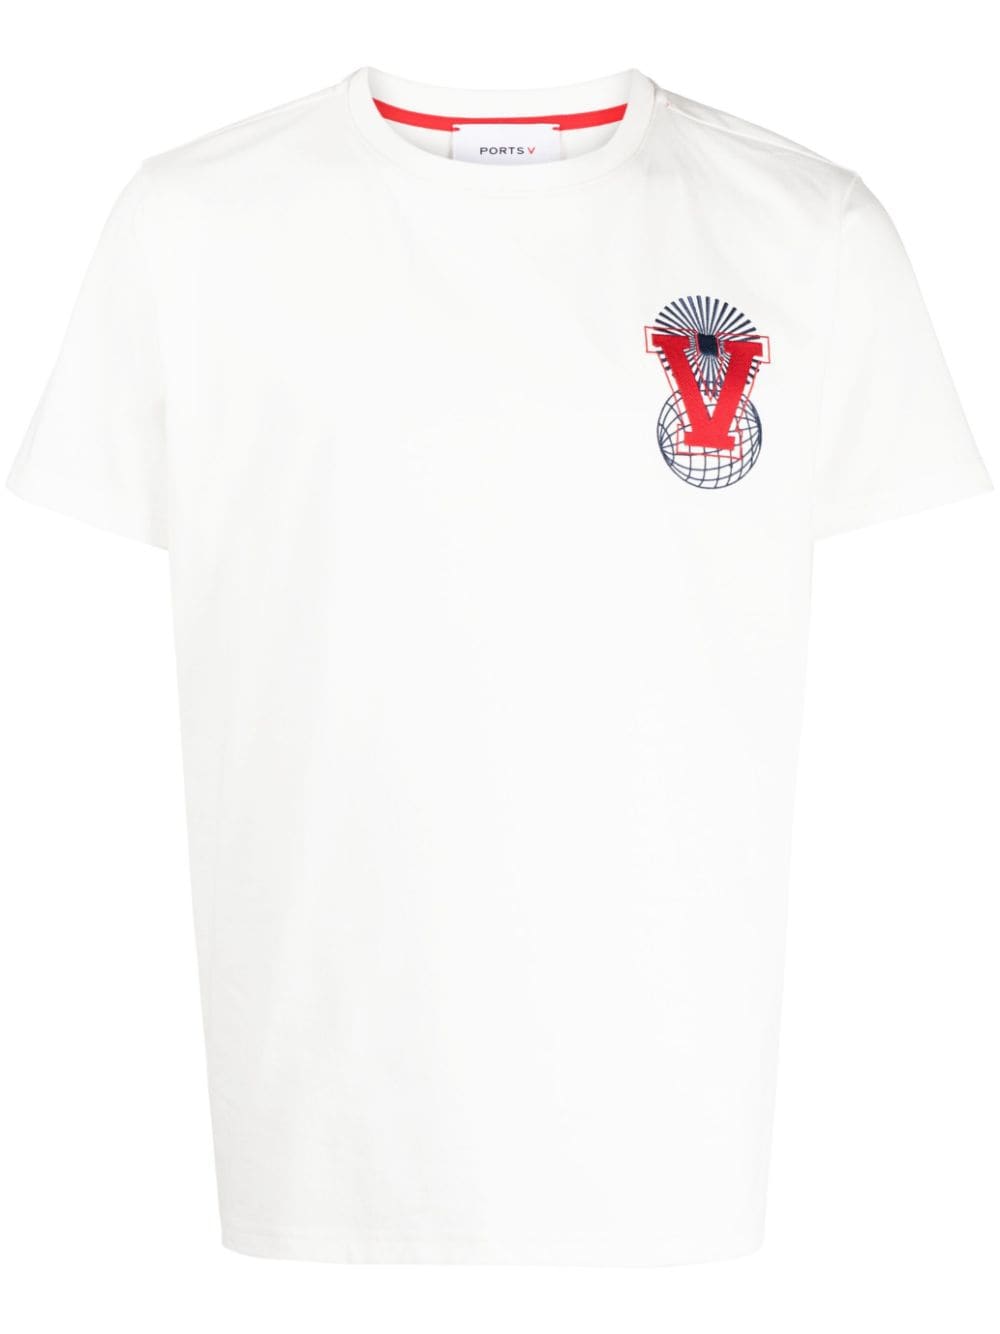 Image 1 of Ports V logo-embroidered T-shirt